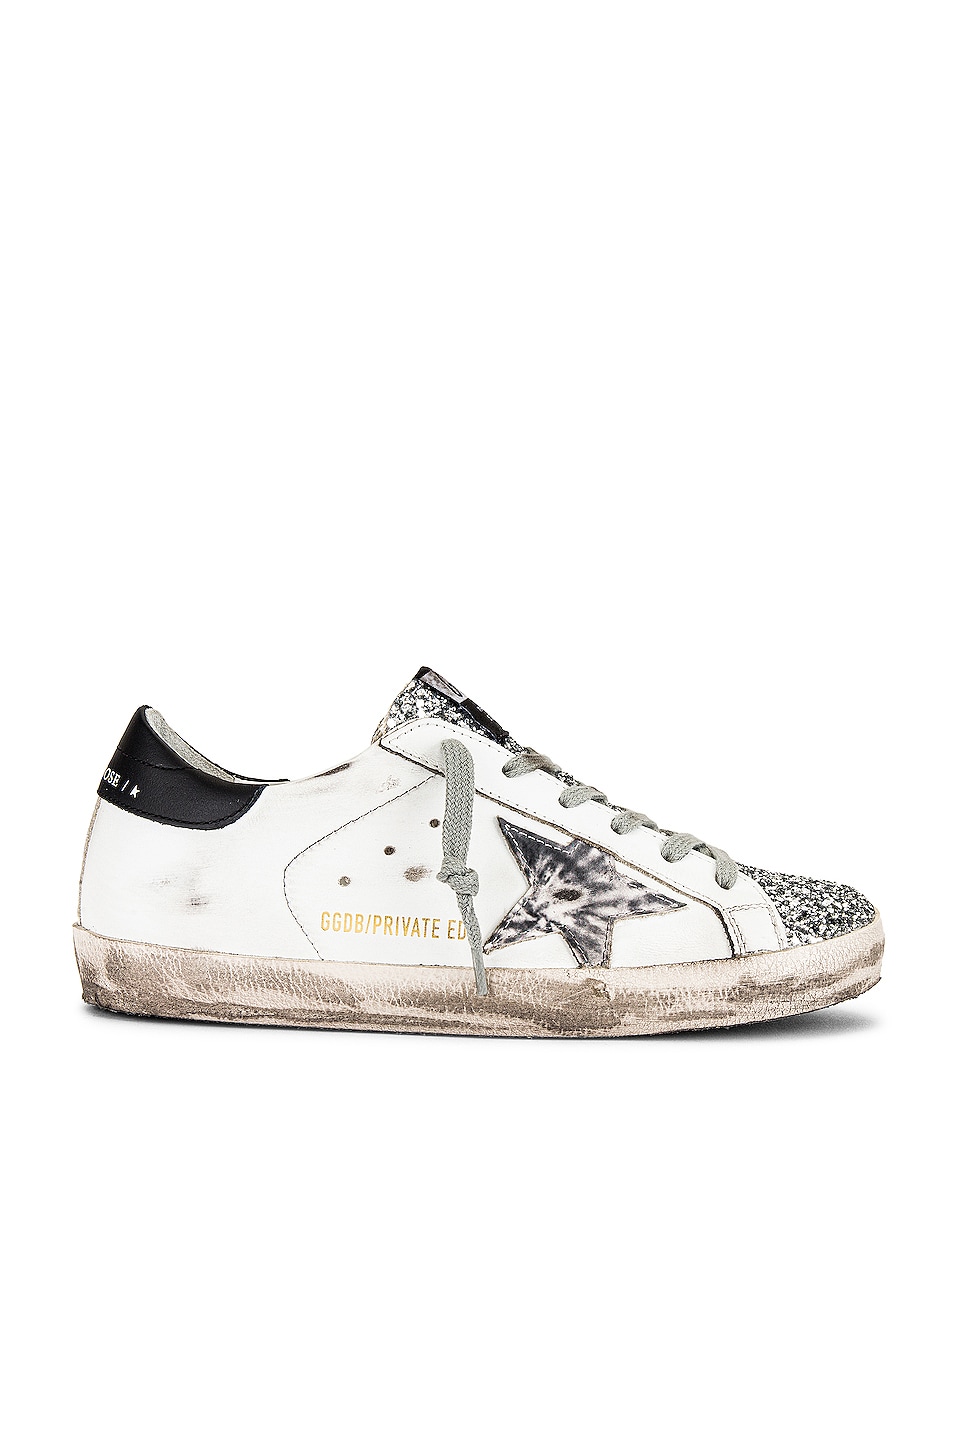 Golden Goose X REVOLVE Superstar Sneaker in White, Silver, & Black ...